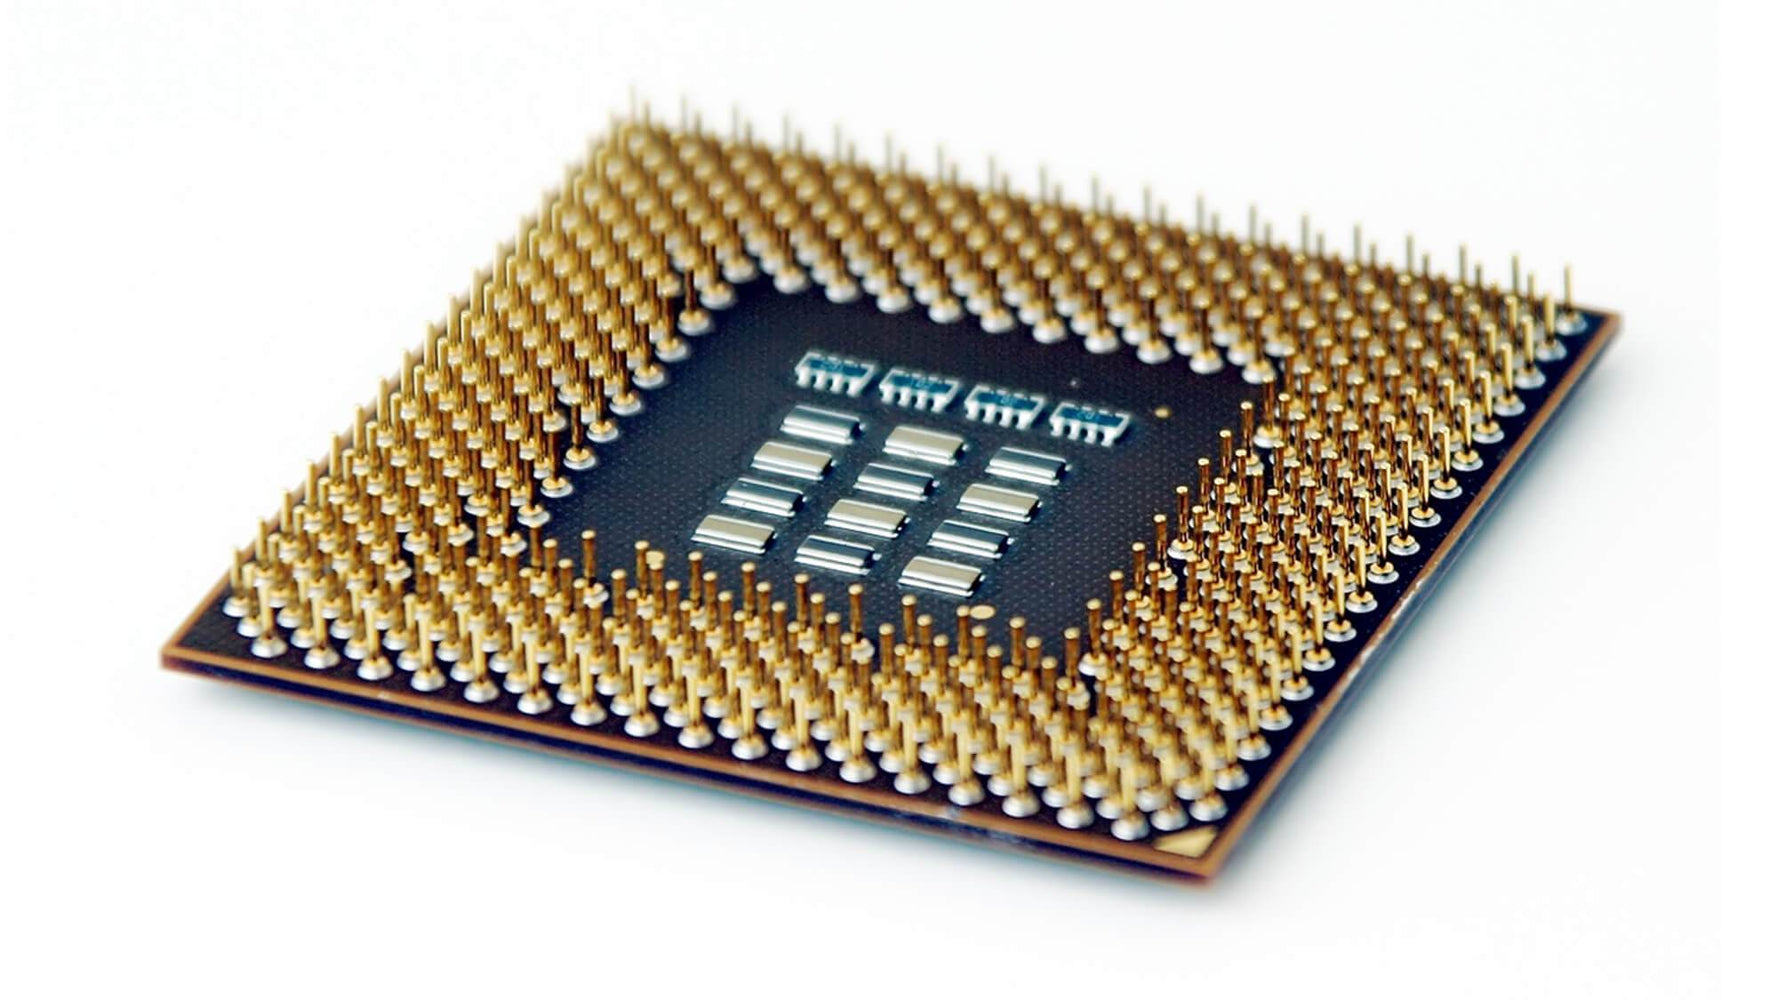 X5690 - Intel Xeon X5690 6 Core 3.46GHz 6.40GT/s QPI 12MB L3 Cache Processor